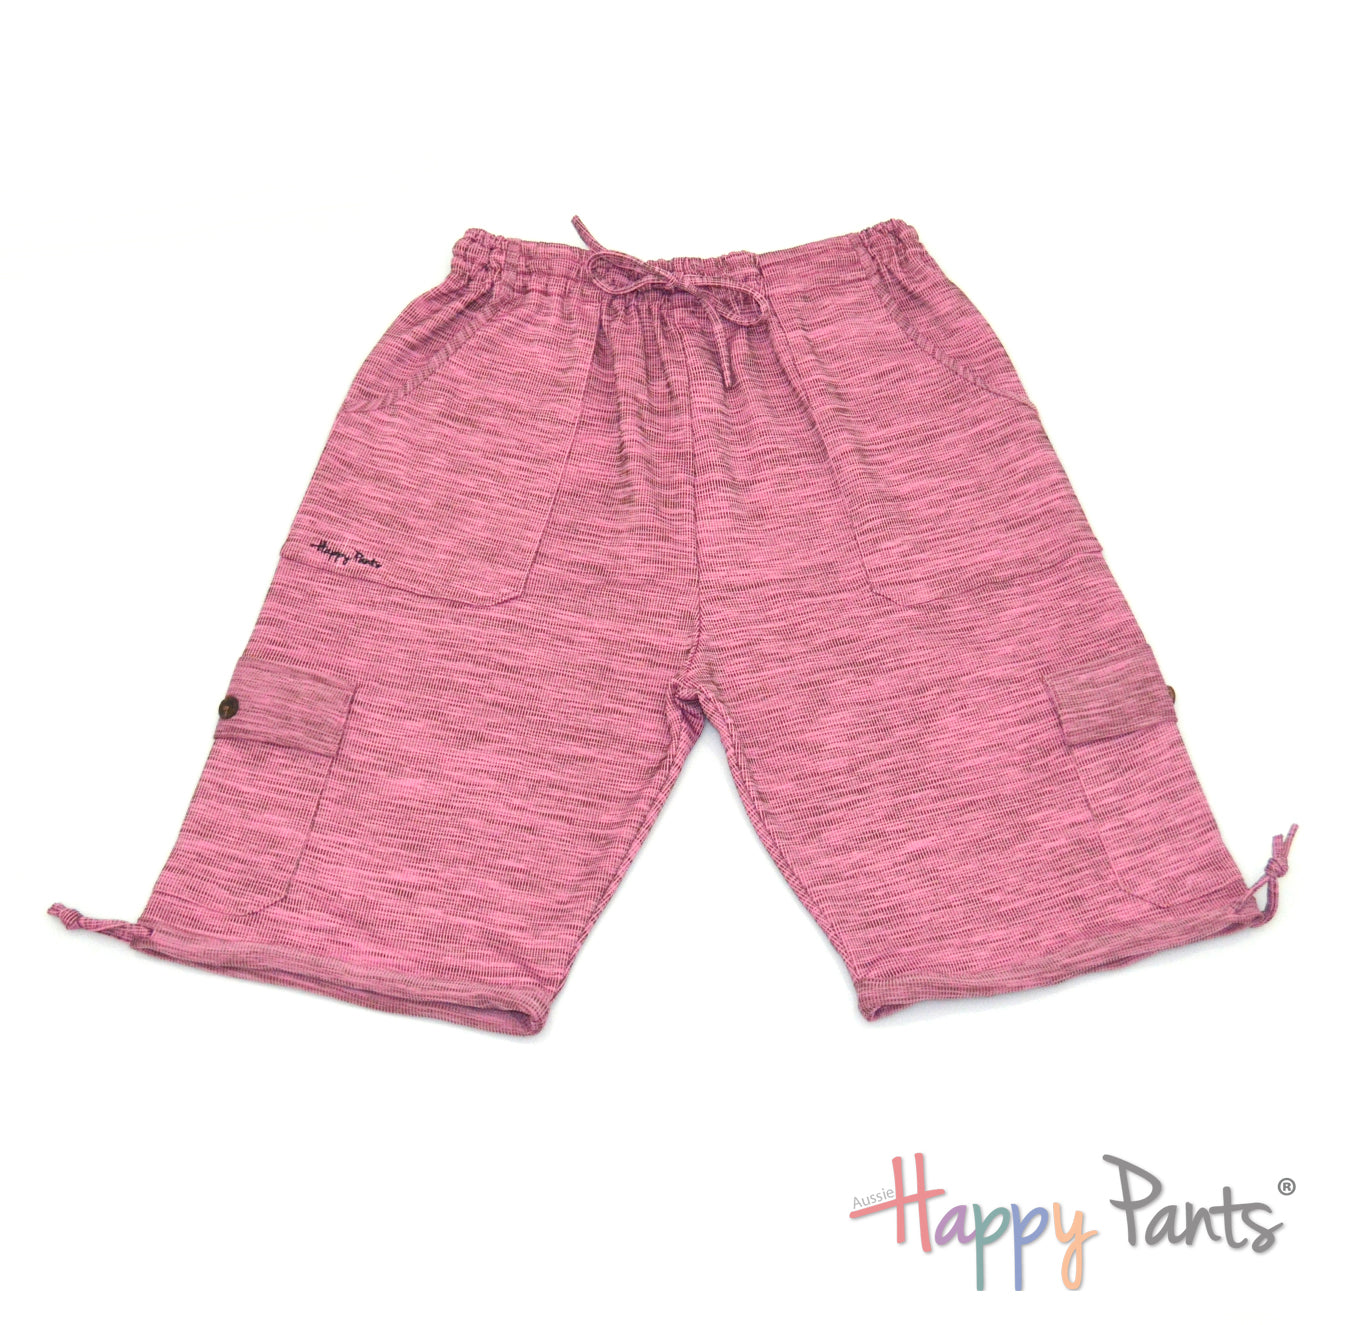 Ladies long shorts resort wear elastic waist shorts cotton Happy Pants